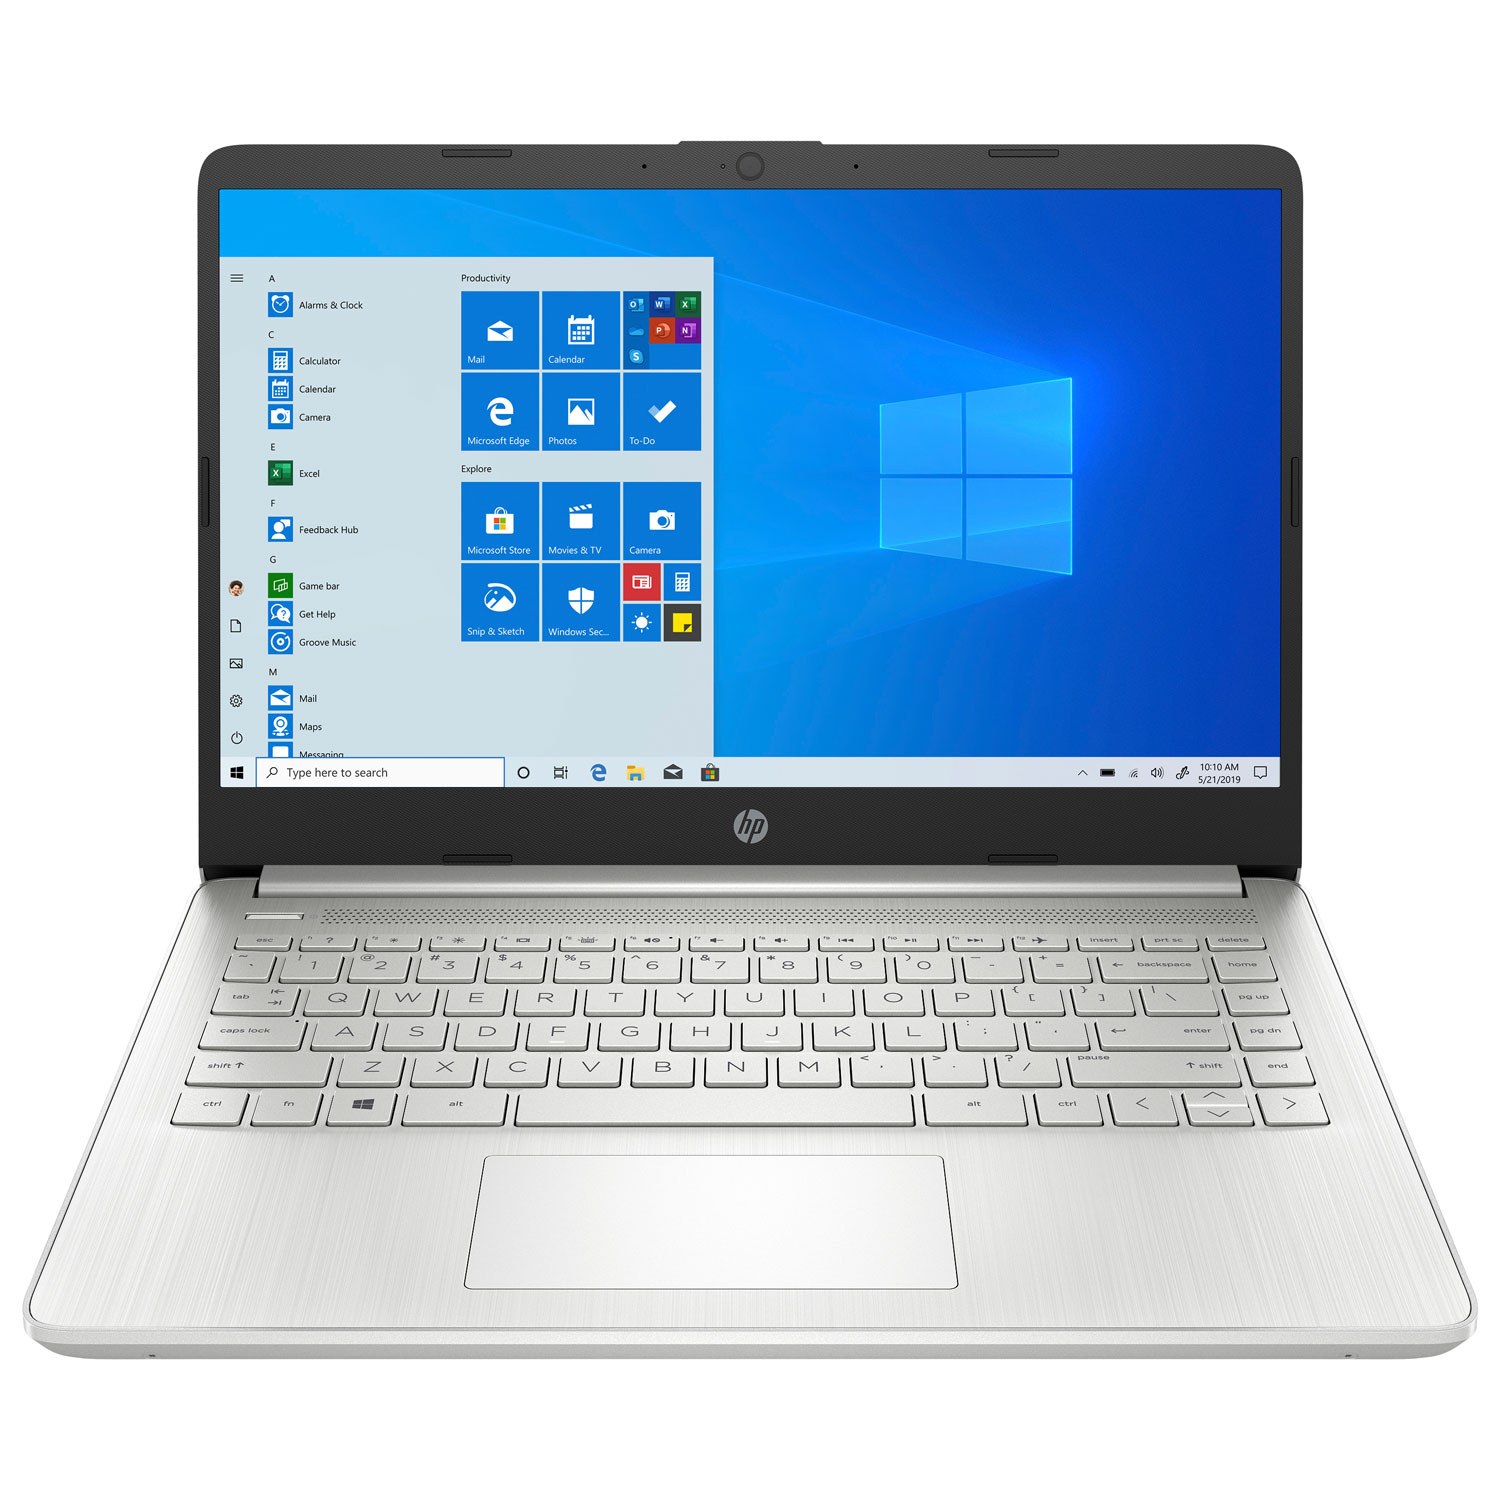 HP 14" Laptop with 1 year of Microsoft 365 - Silver (AMD 3020e/64GB eMMC/4GB RAM/Windows 10 S)